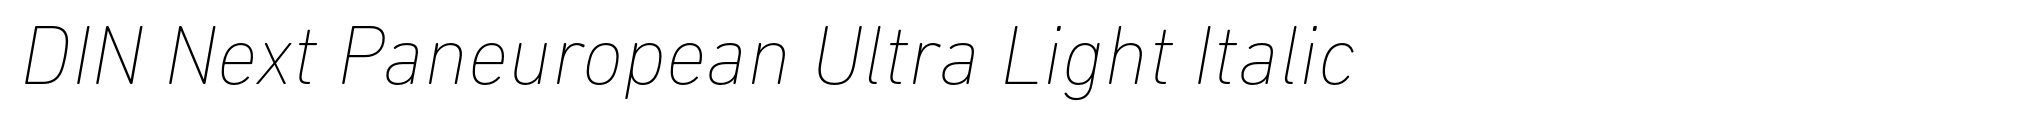 DIN Next Paneuropean Ultra Light Italic image